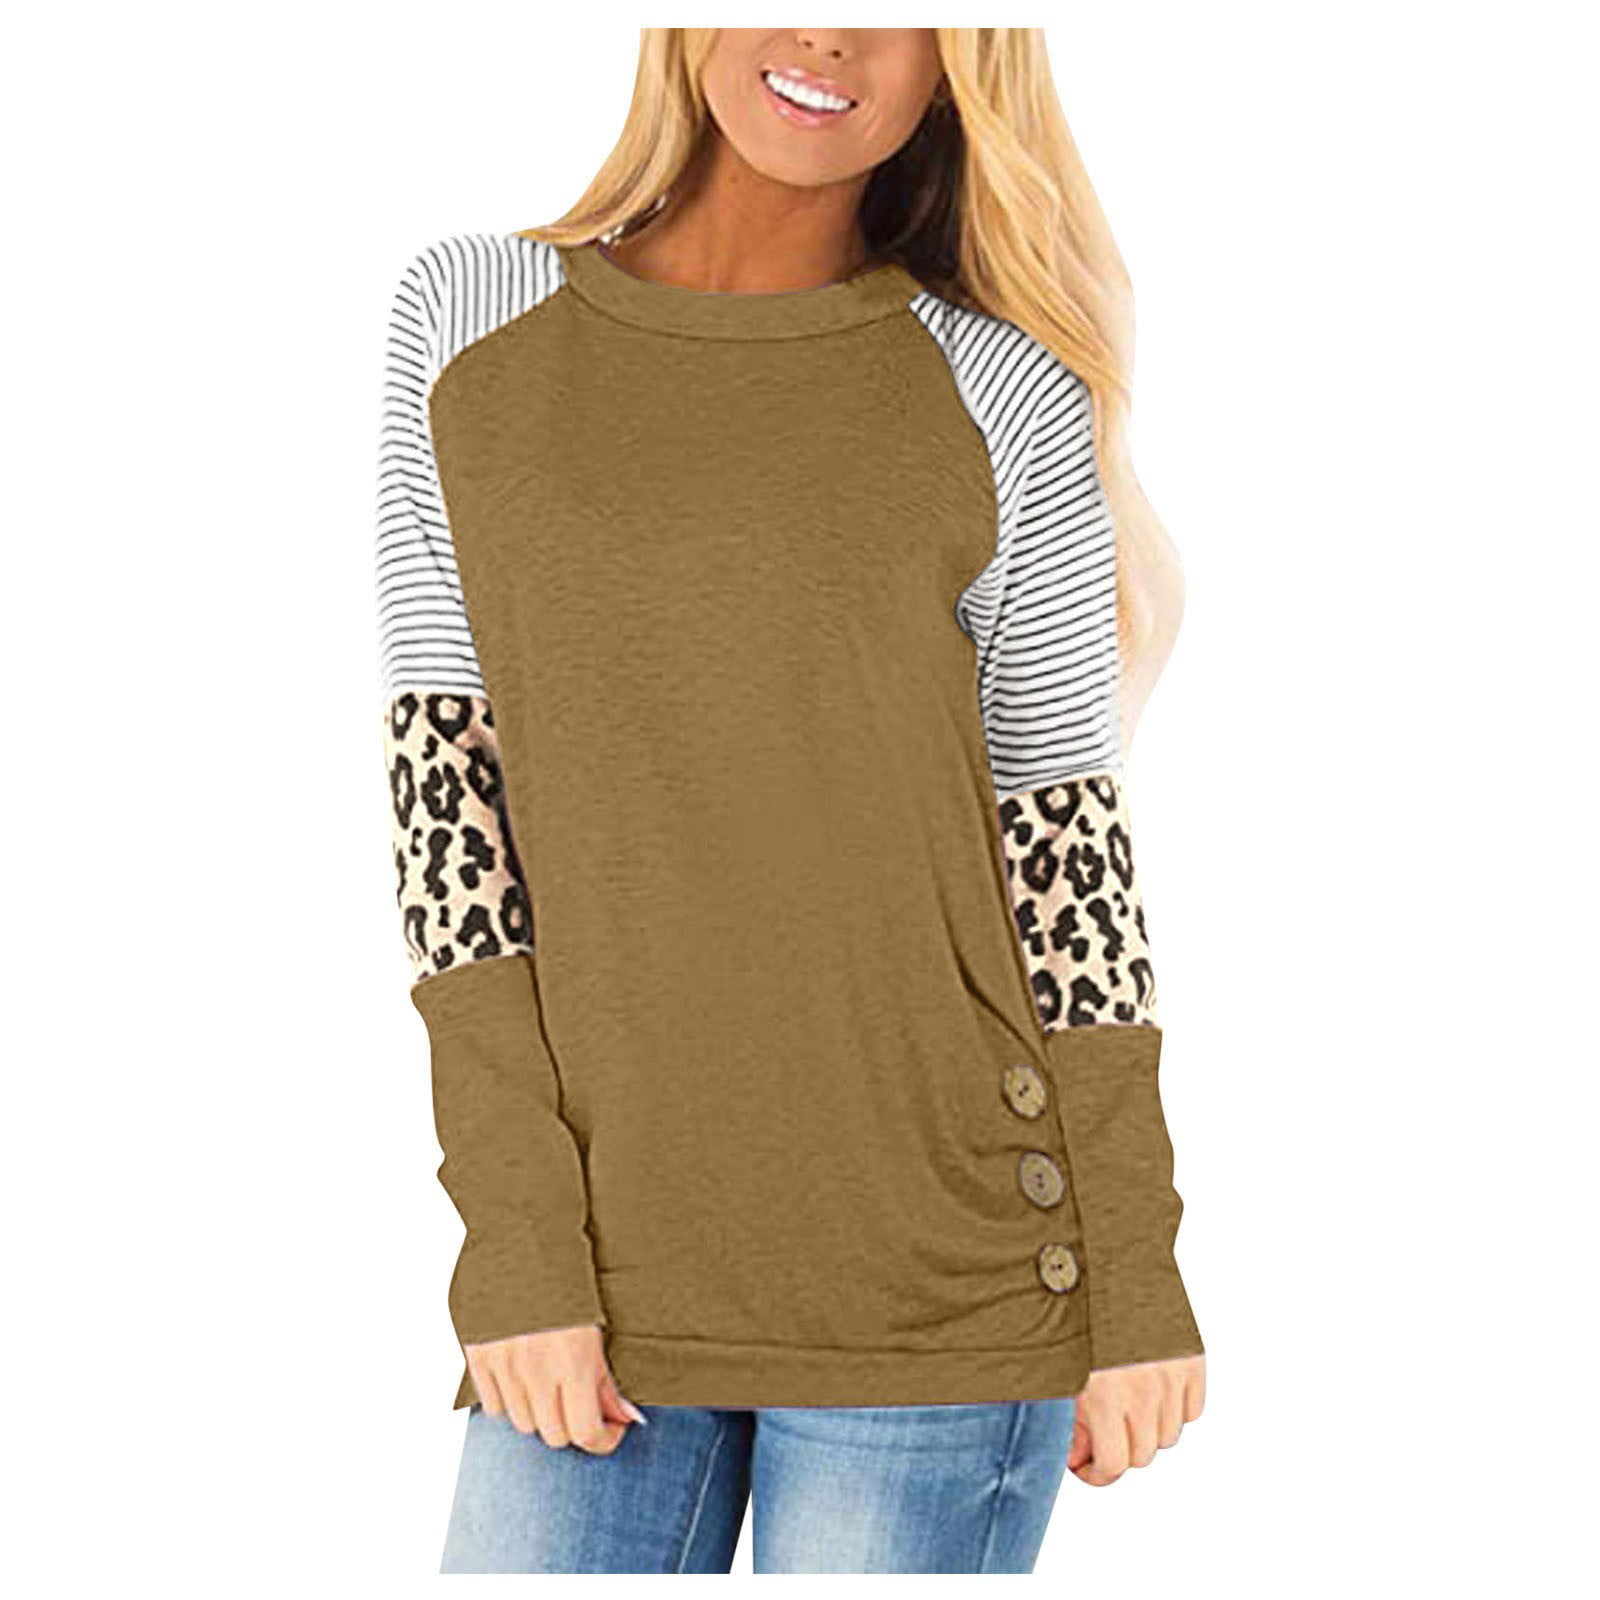 Stripe Print Tops for Women Long Sleeve Crew Neck Cheetah Print Autumn Winter Patchwork Sweatshirt Blouse 